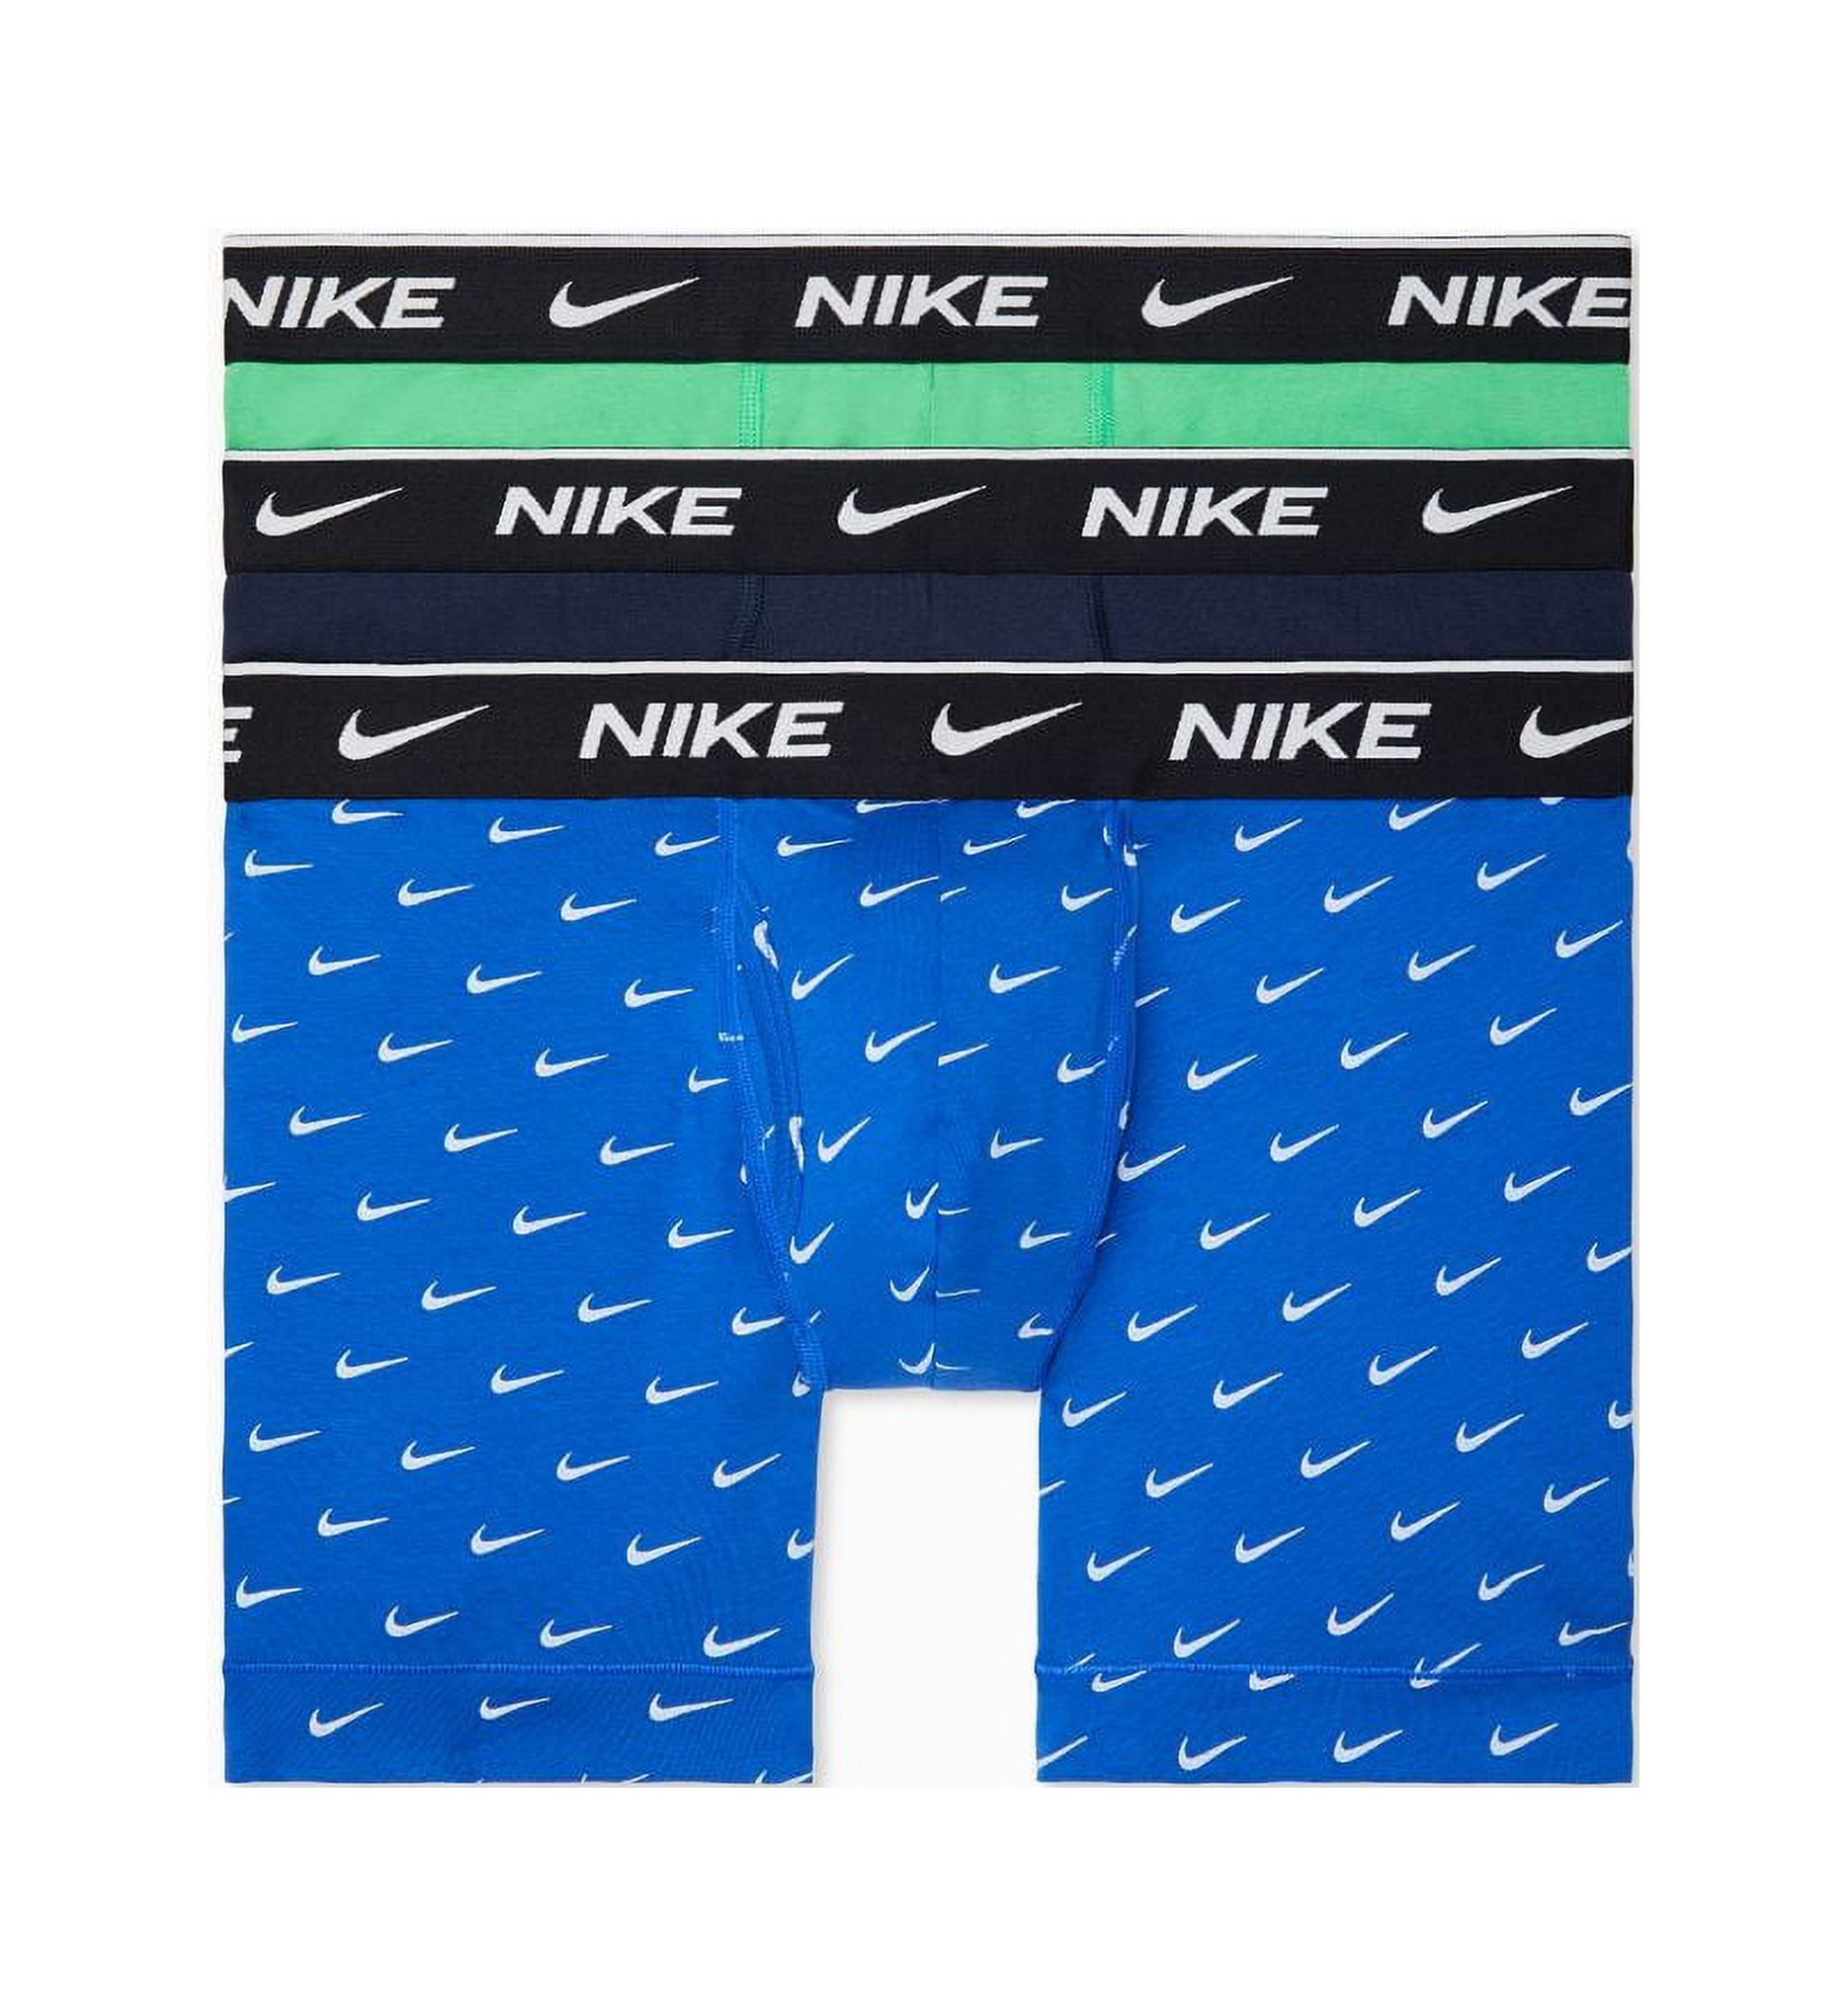 Boxer shorts Nike Cotton Trunk Boxershort 3er Pack 